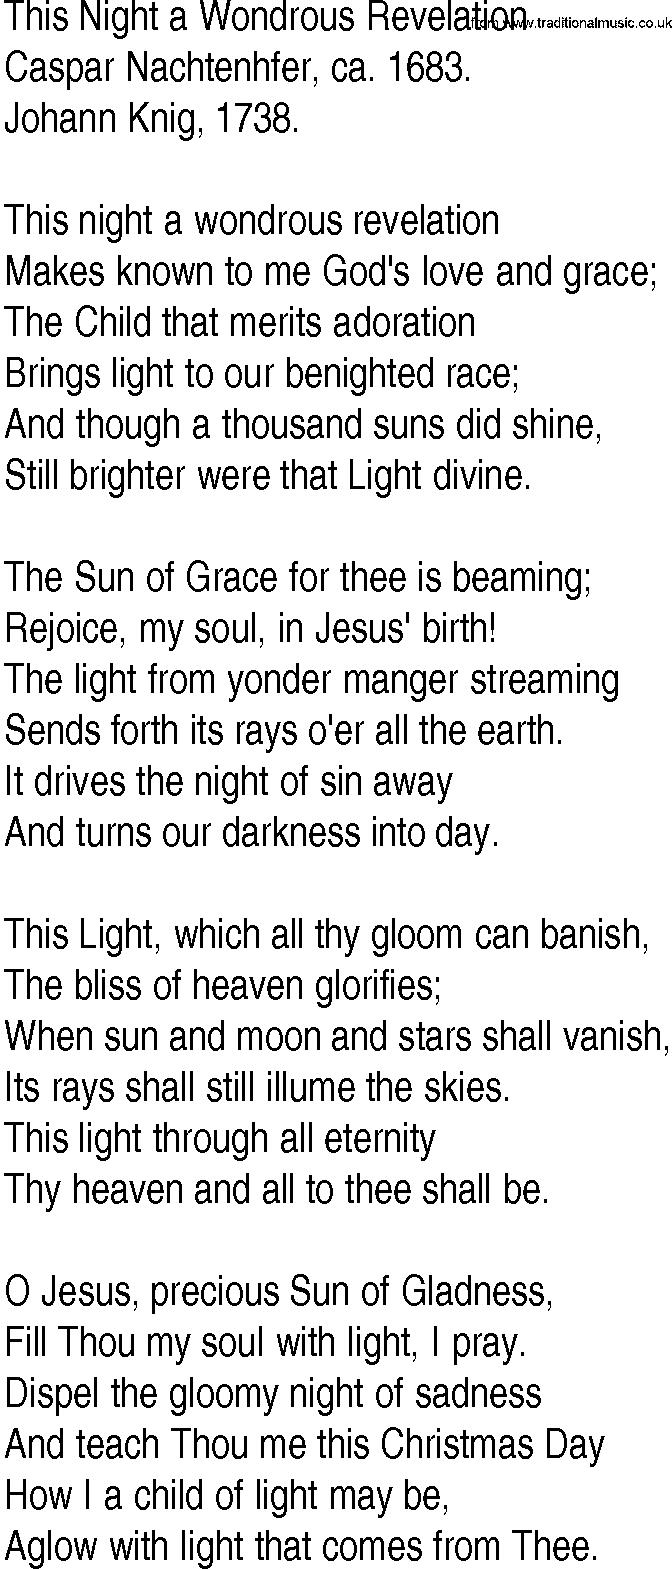 Hymn and Gospel Song: This Night a Wondrous Revelation by Caspar Nachtenhöfer ca lyrics